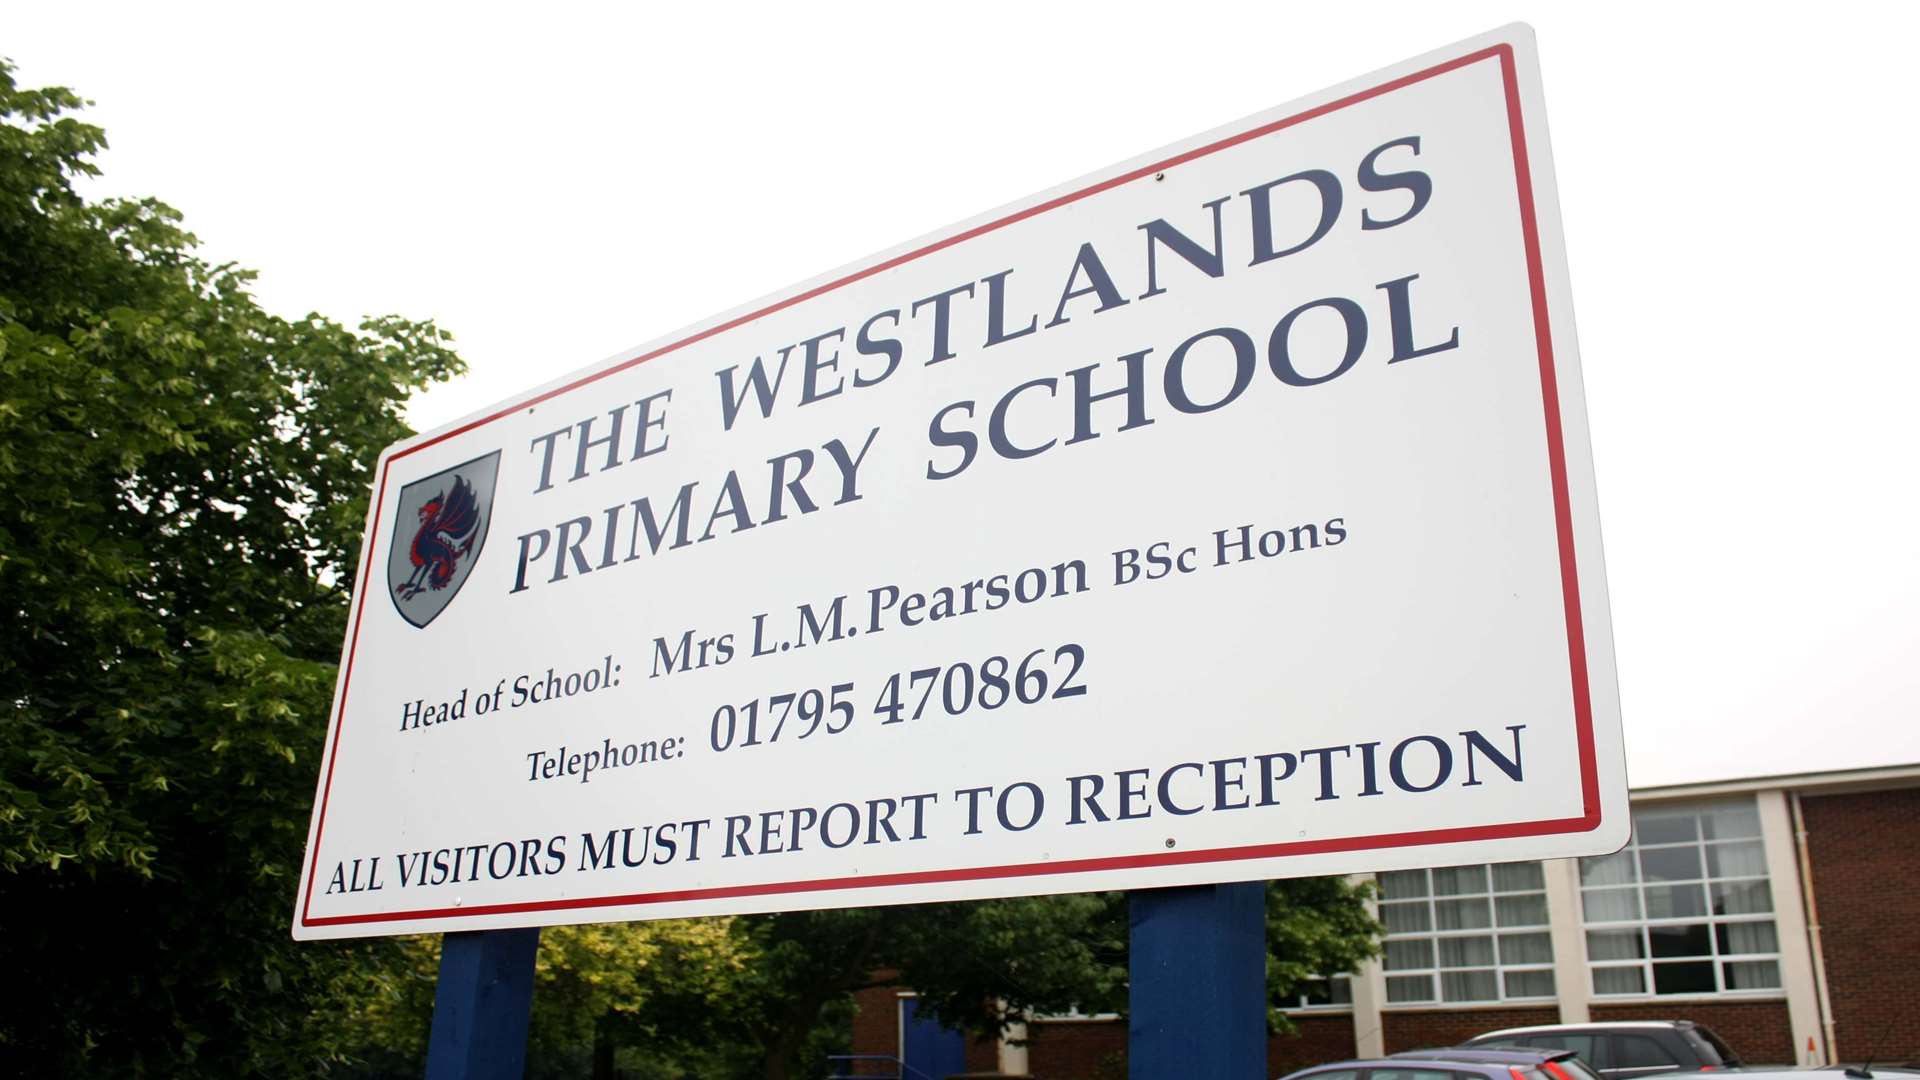 Son Harley goes to Westlands Primary School